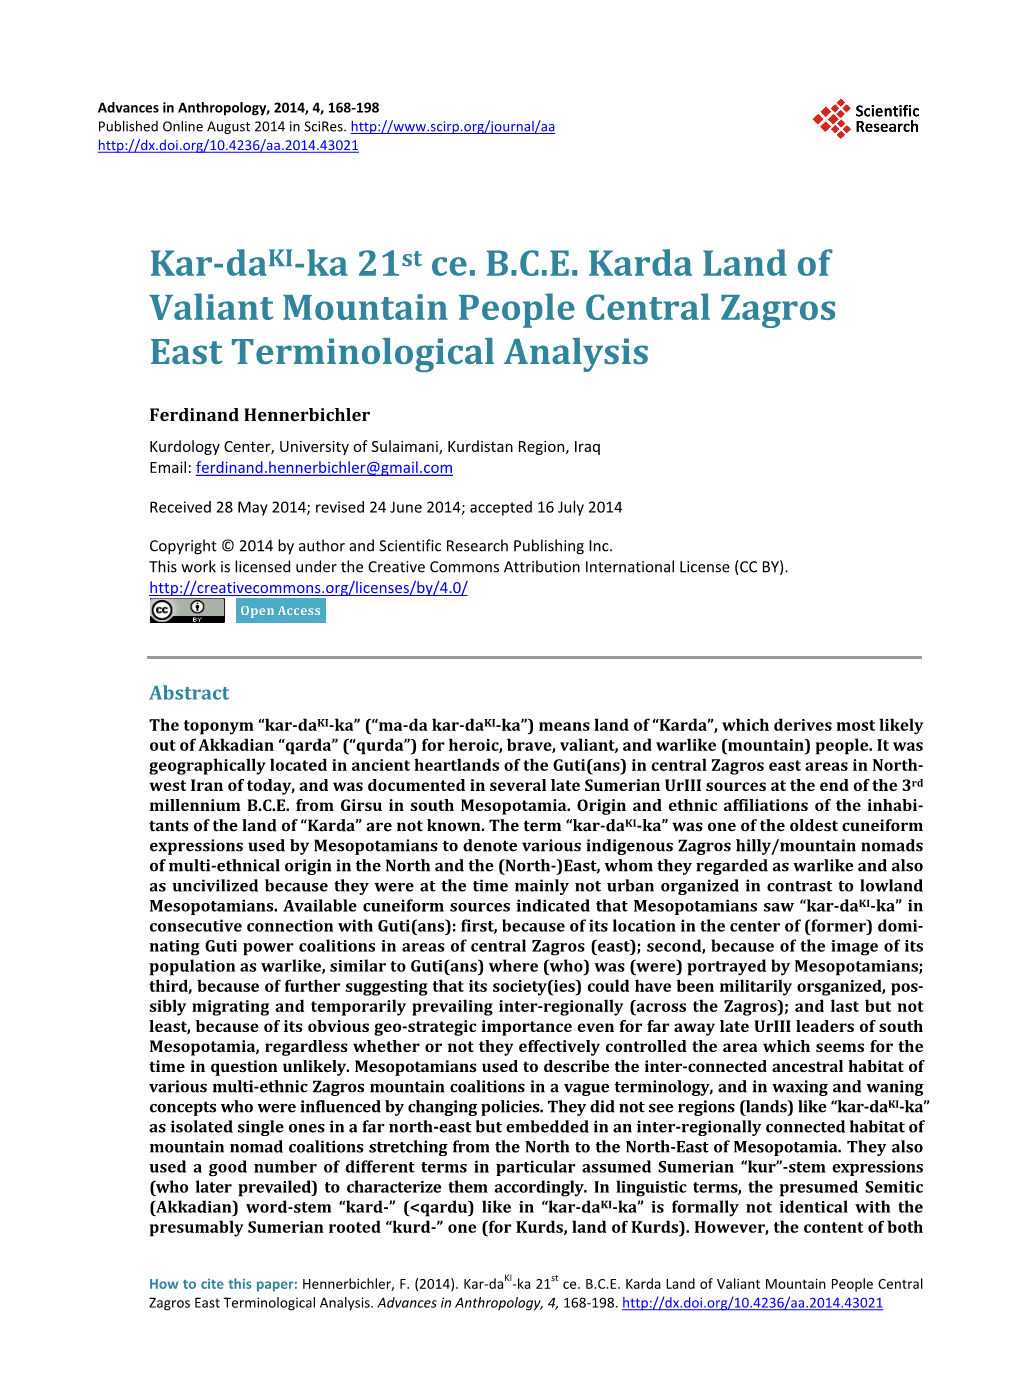 Kar-Daki-Ka 21St Ce. B.C.E. Karda Land of Valiant Mountain People Central Zagros East Terminological Analysis